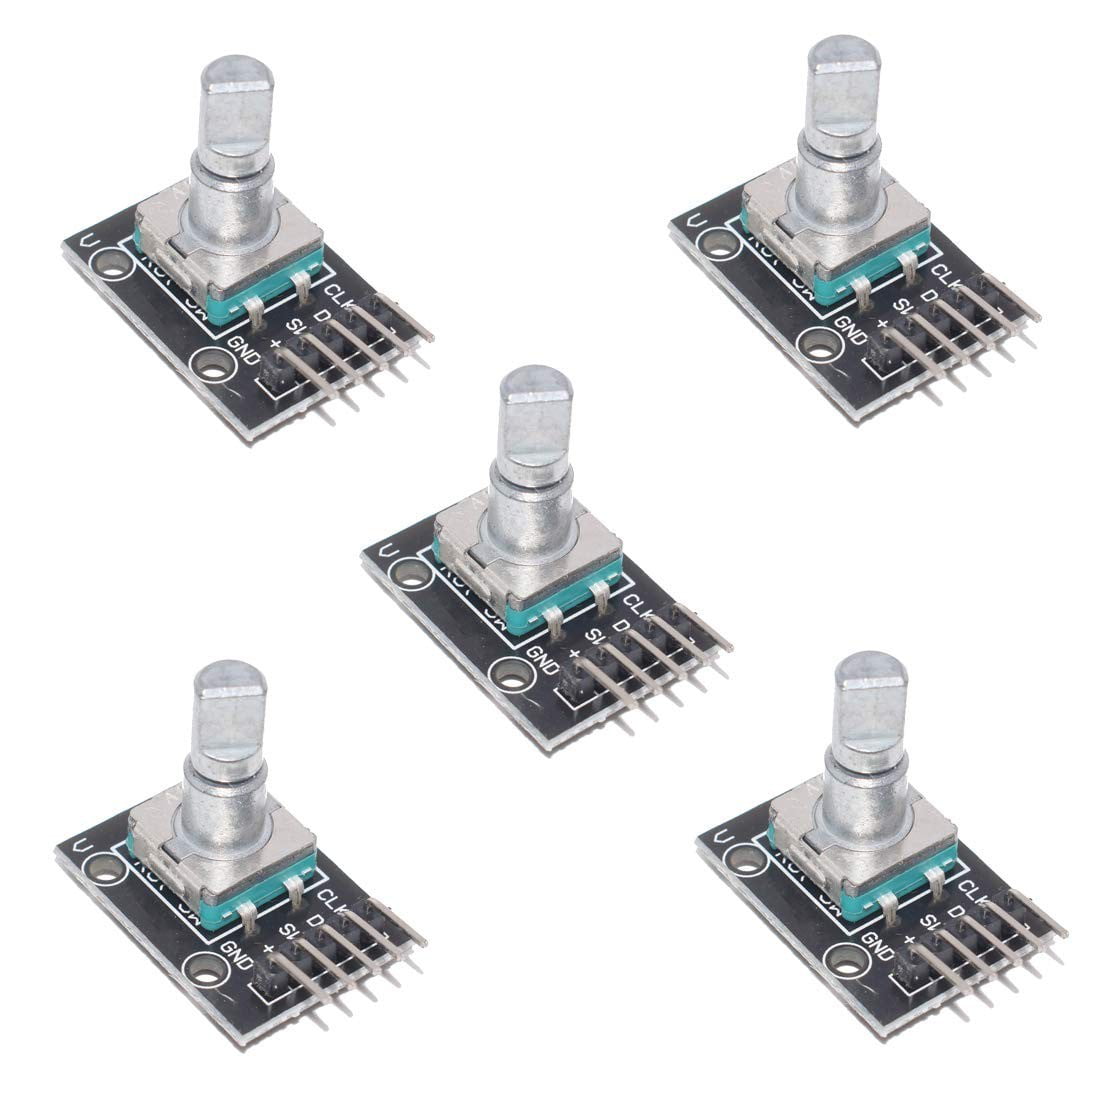 New 5V Rotary Encoder Module Brick Sensor Development Board For Arduino 